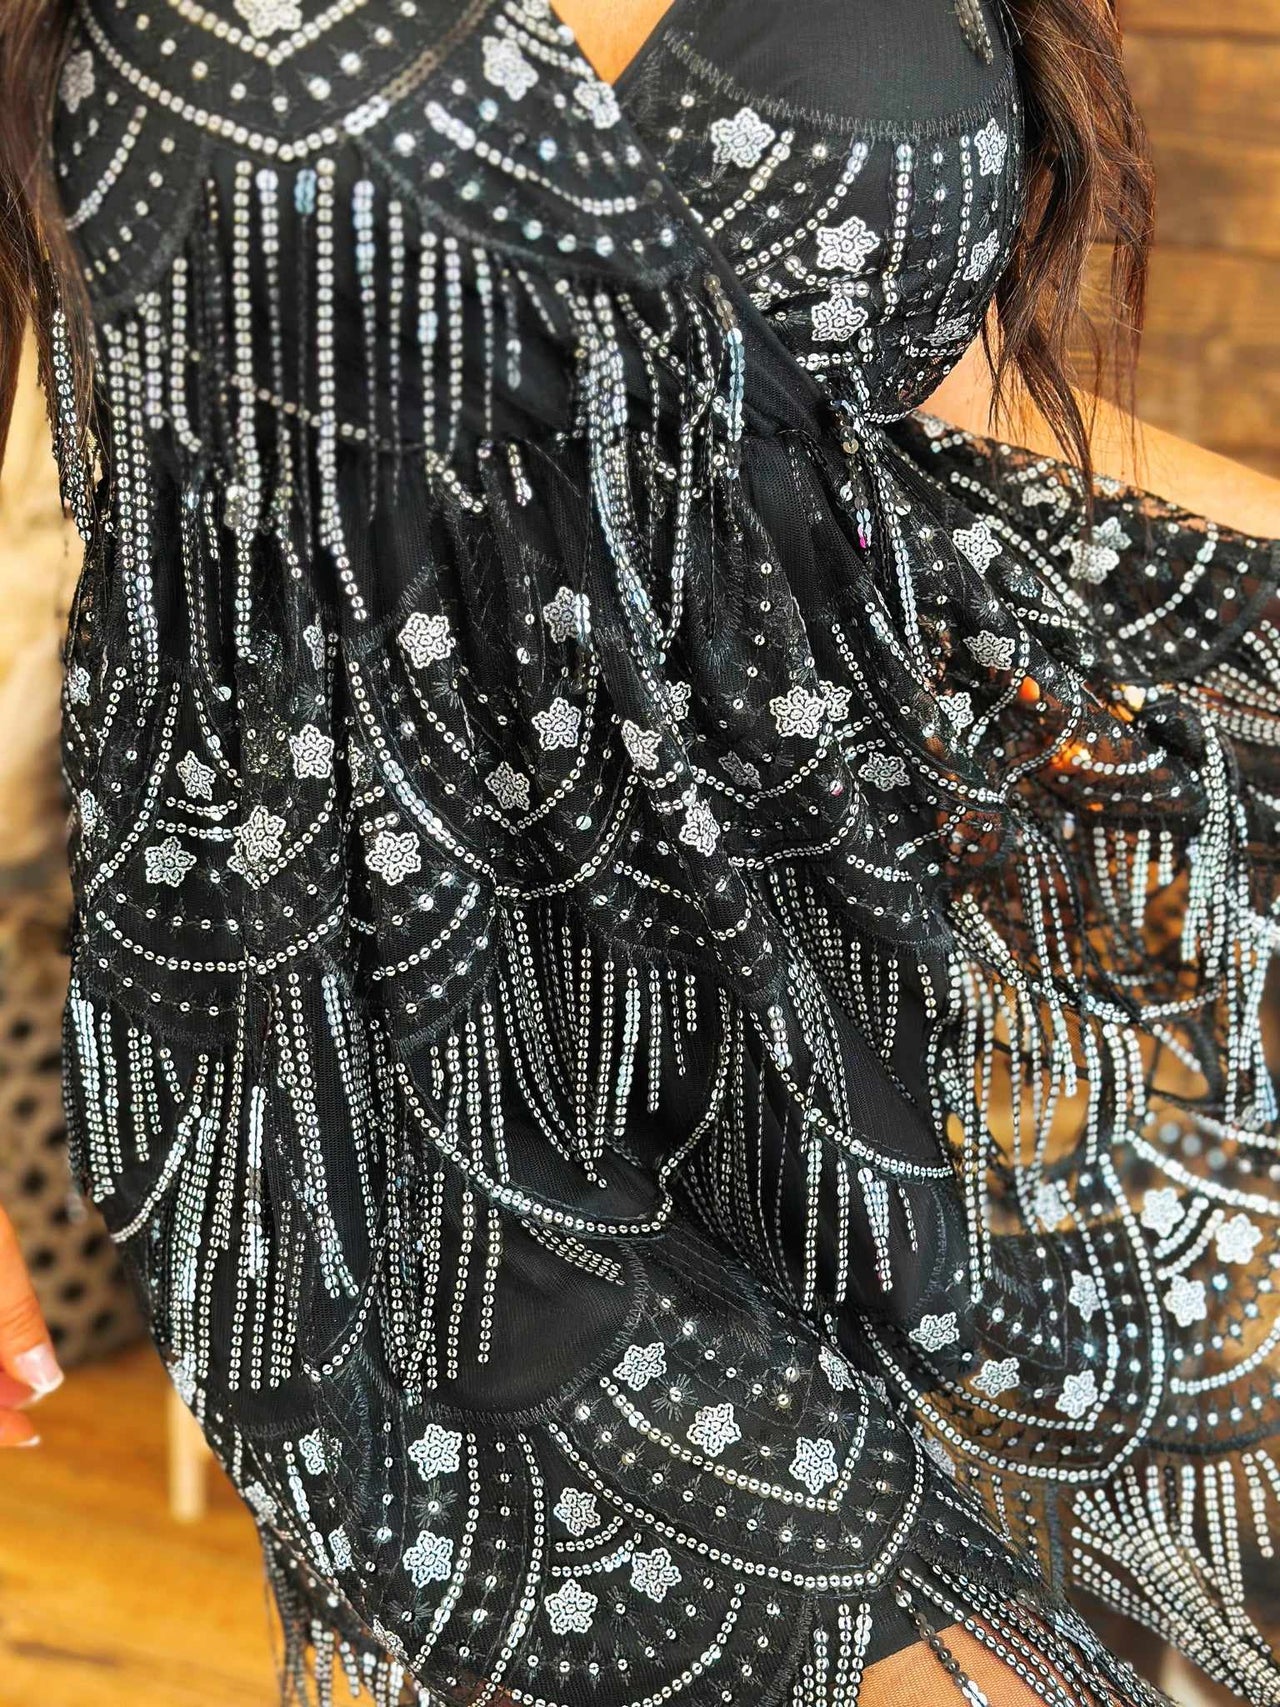 Black dress with gunmetal fringe.